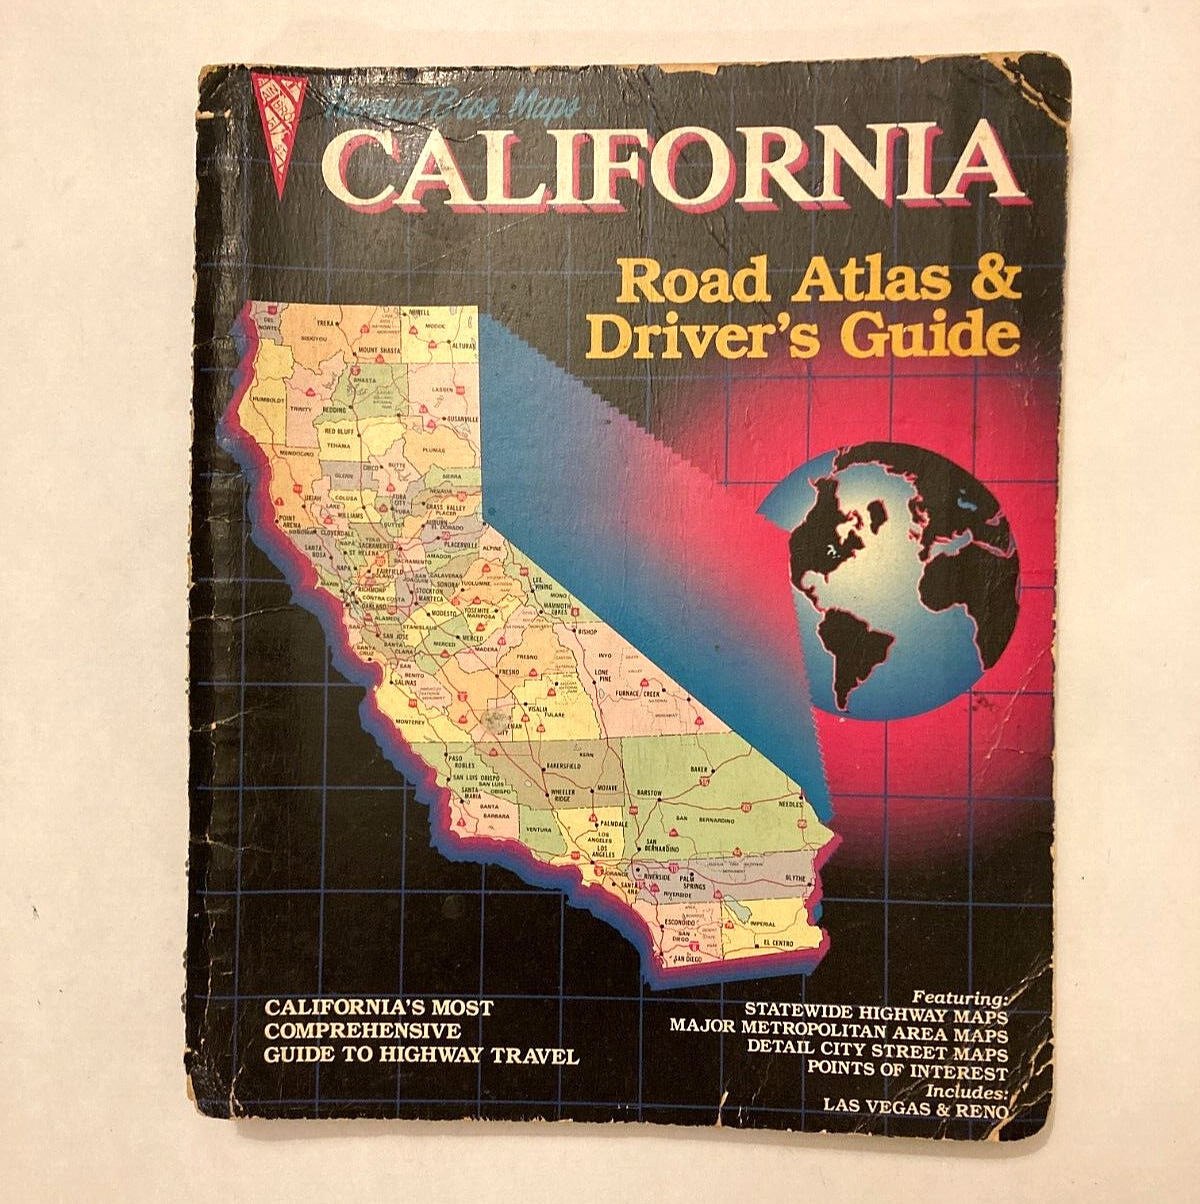 Thomas Bros Maps CALIFORNIA Road Atlas & Driver\'s Guide 1987 5th Edition